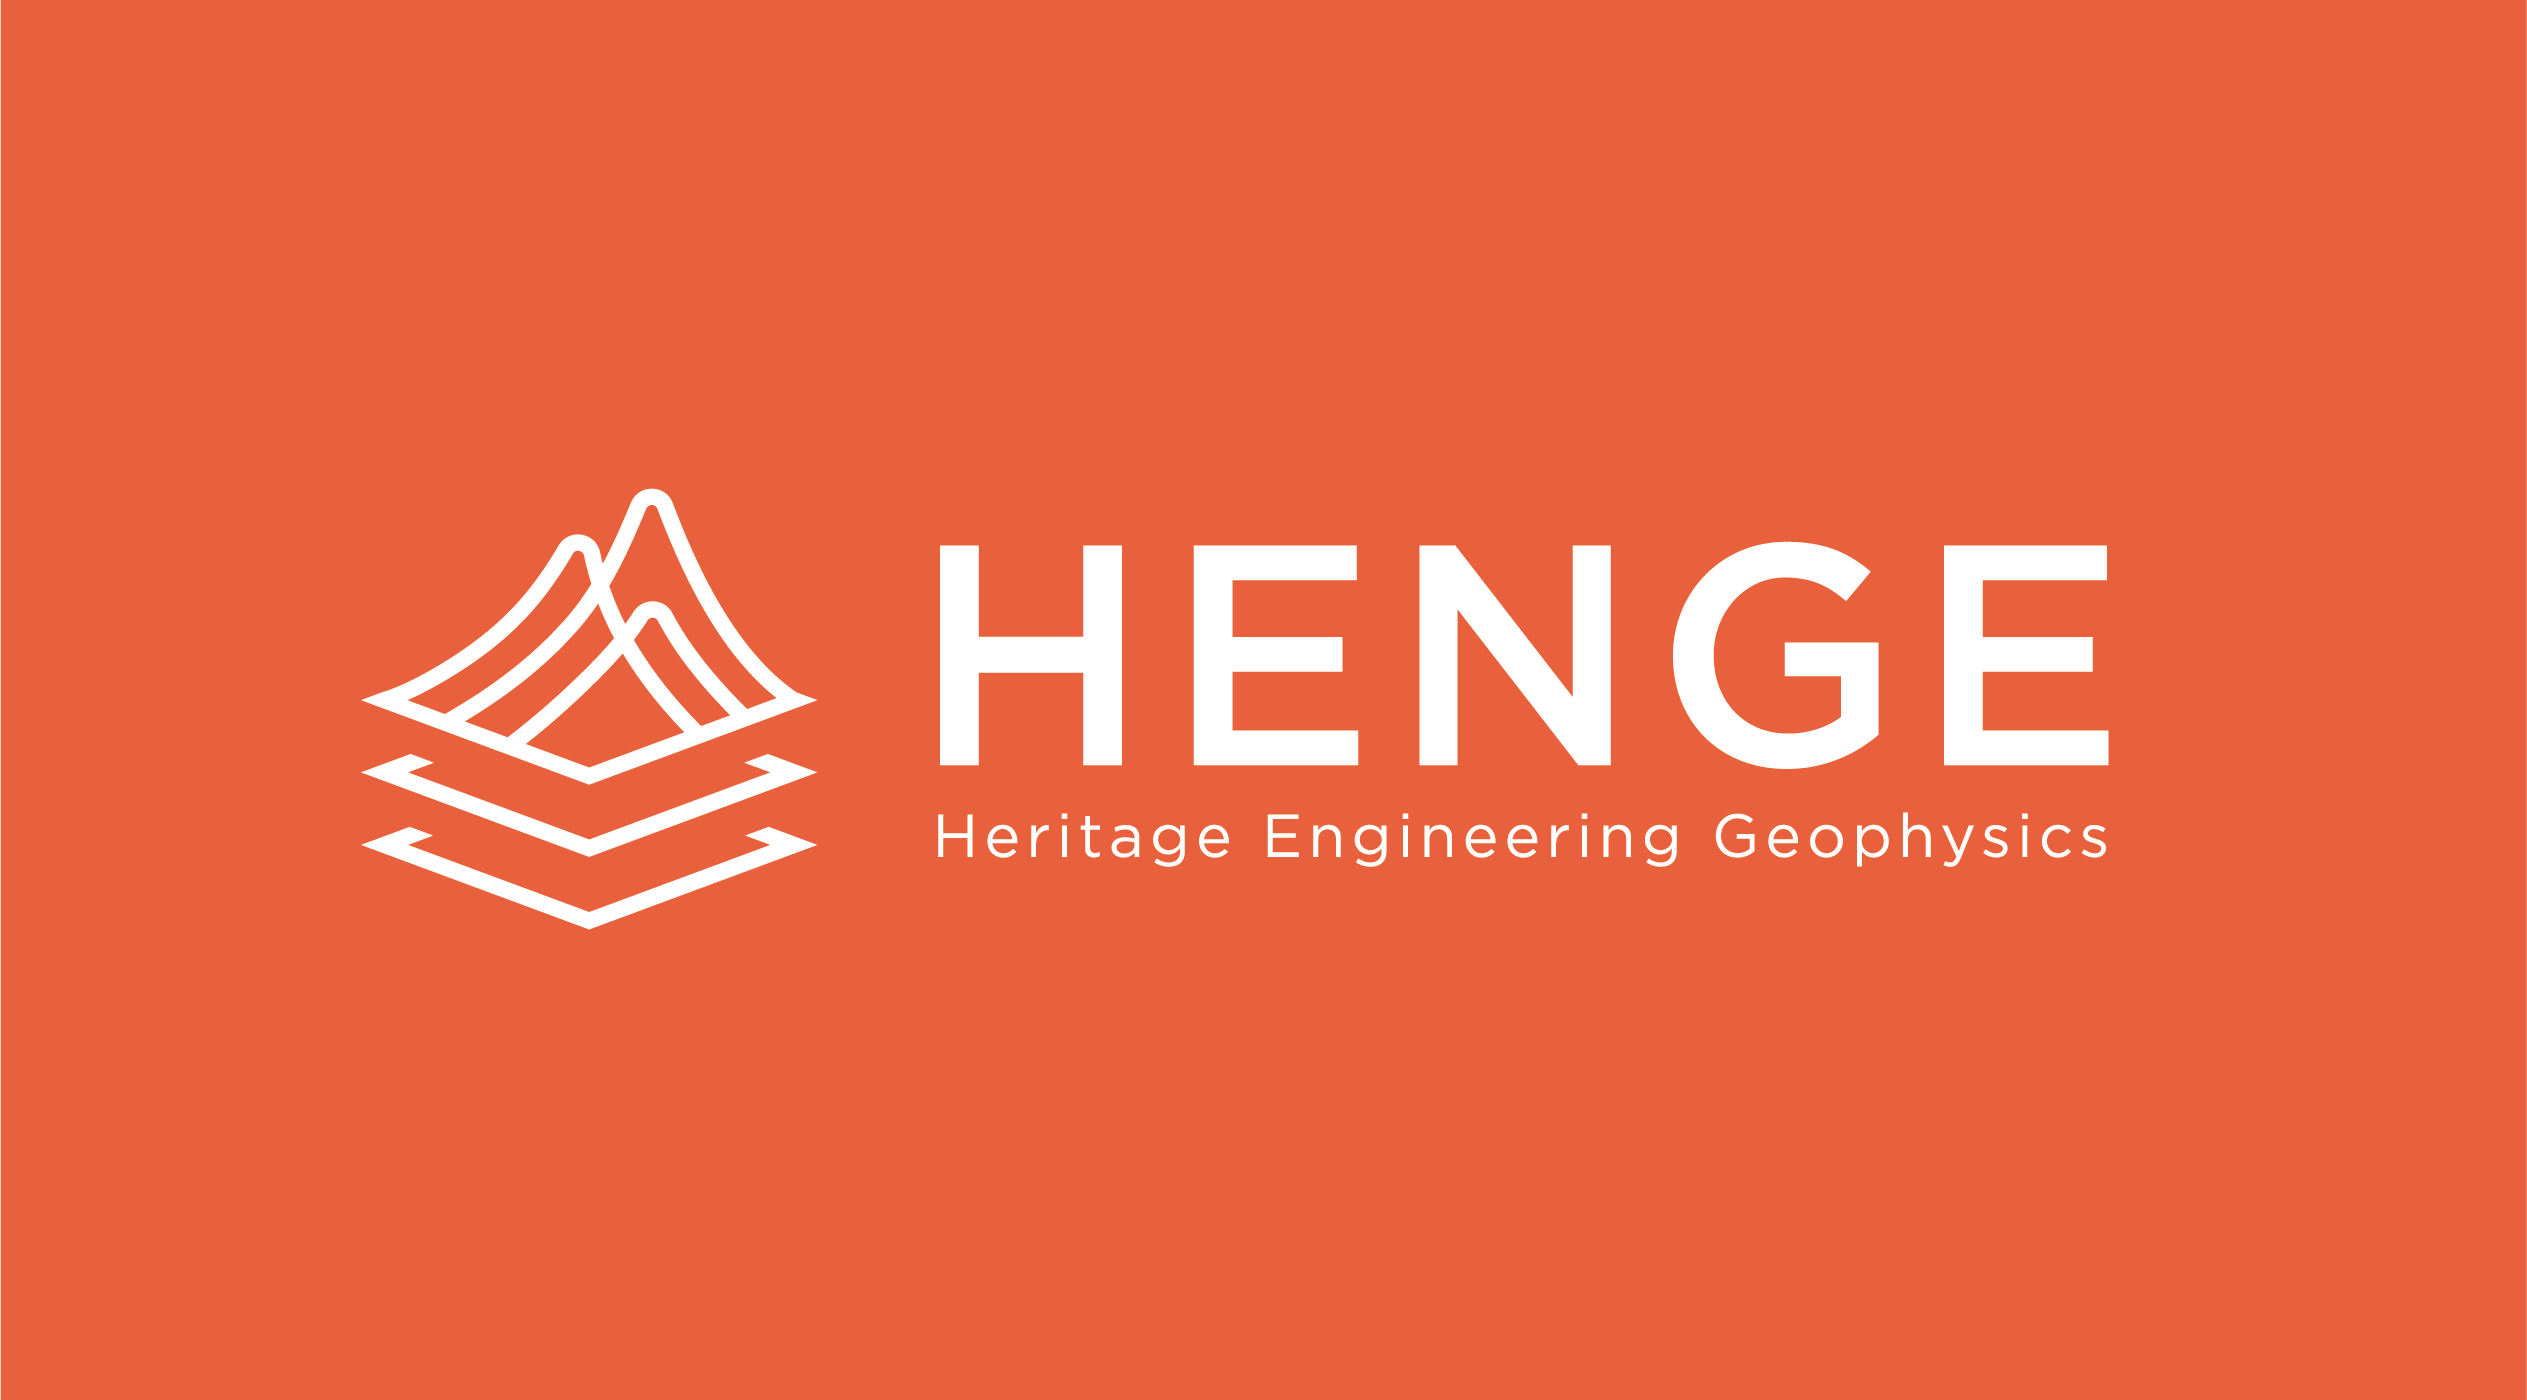 Henge S.r.l. Heritage Engineering Geophysics is Born